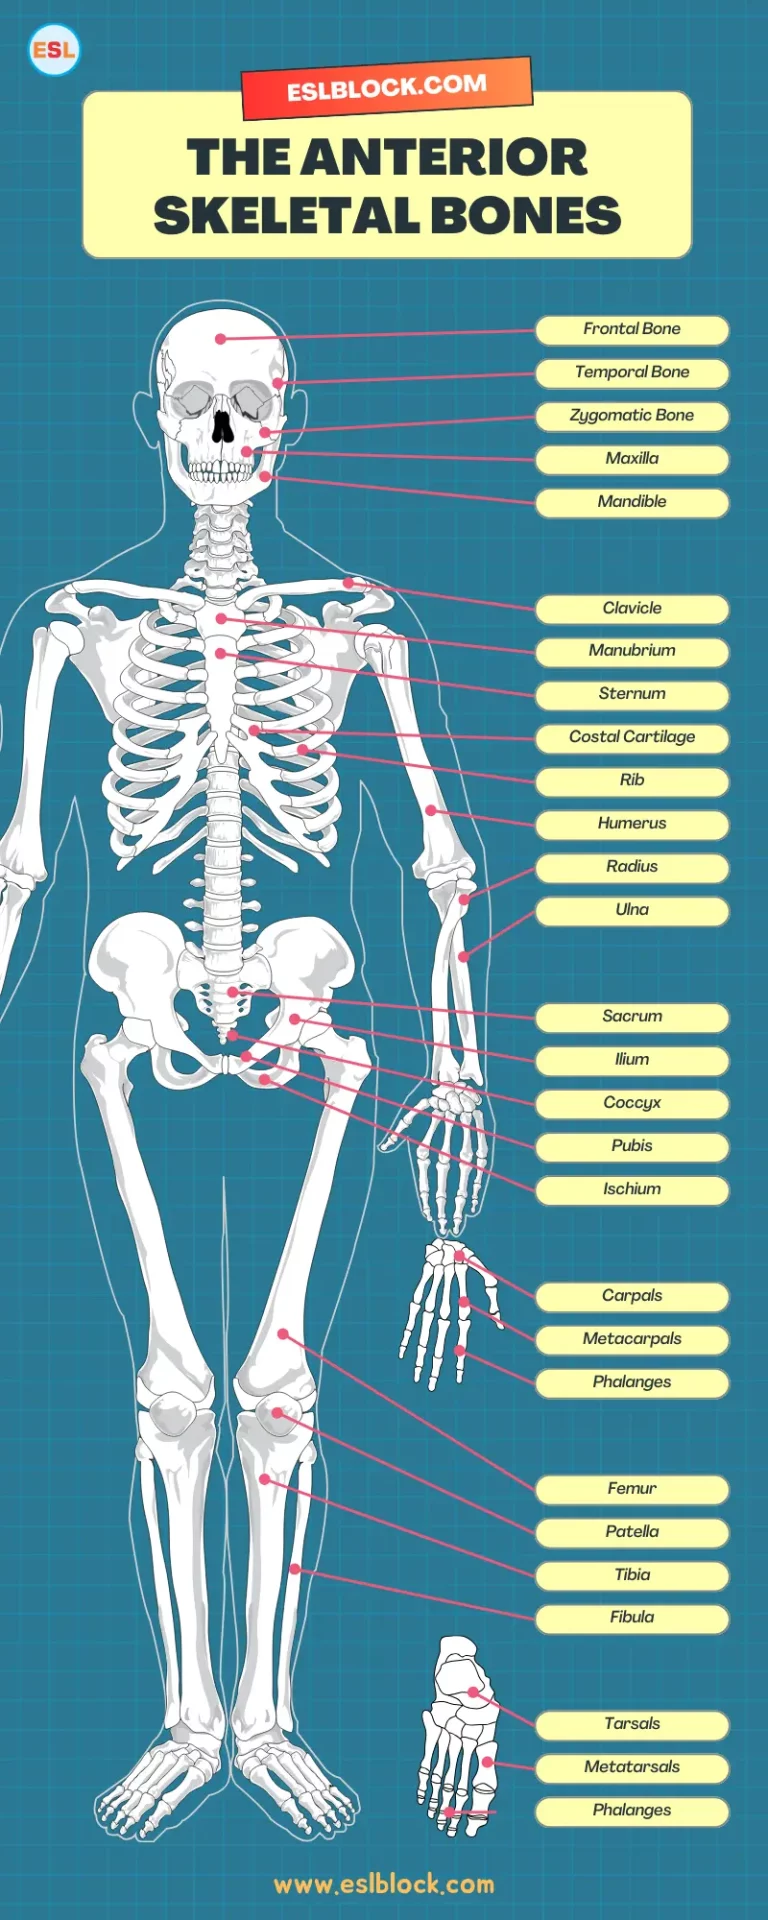 The Anterior Skeletal Bones